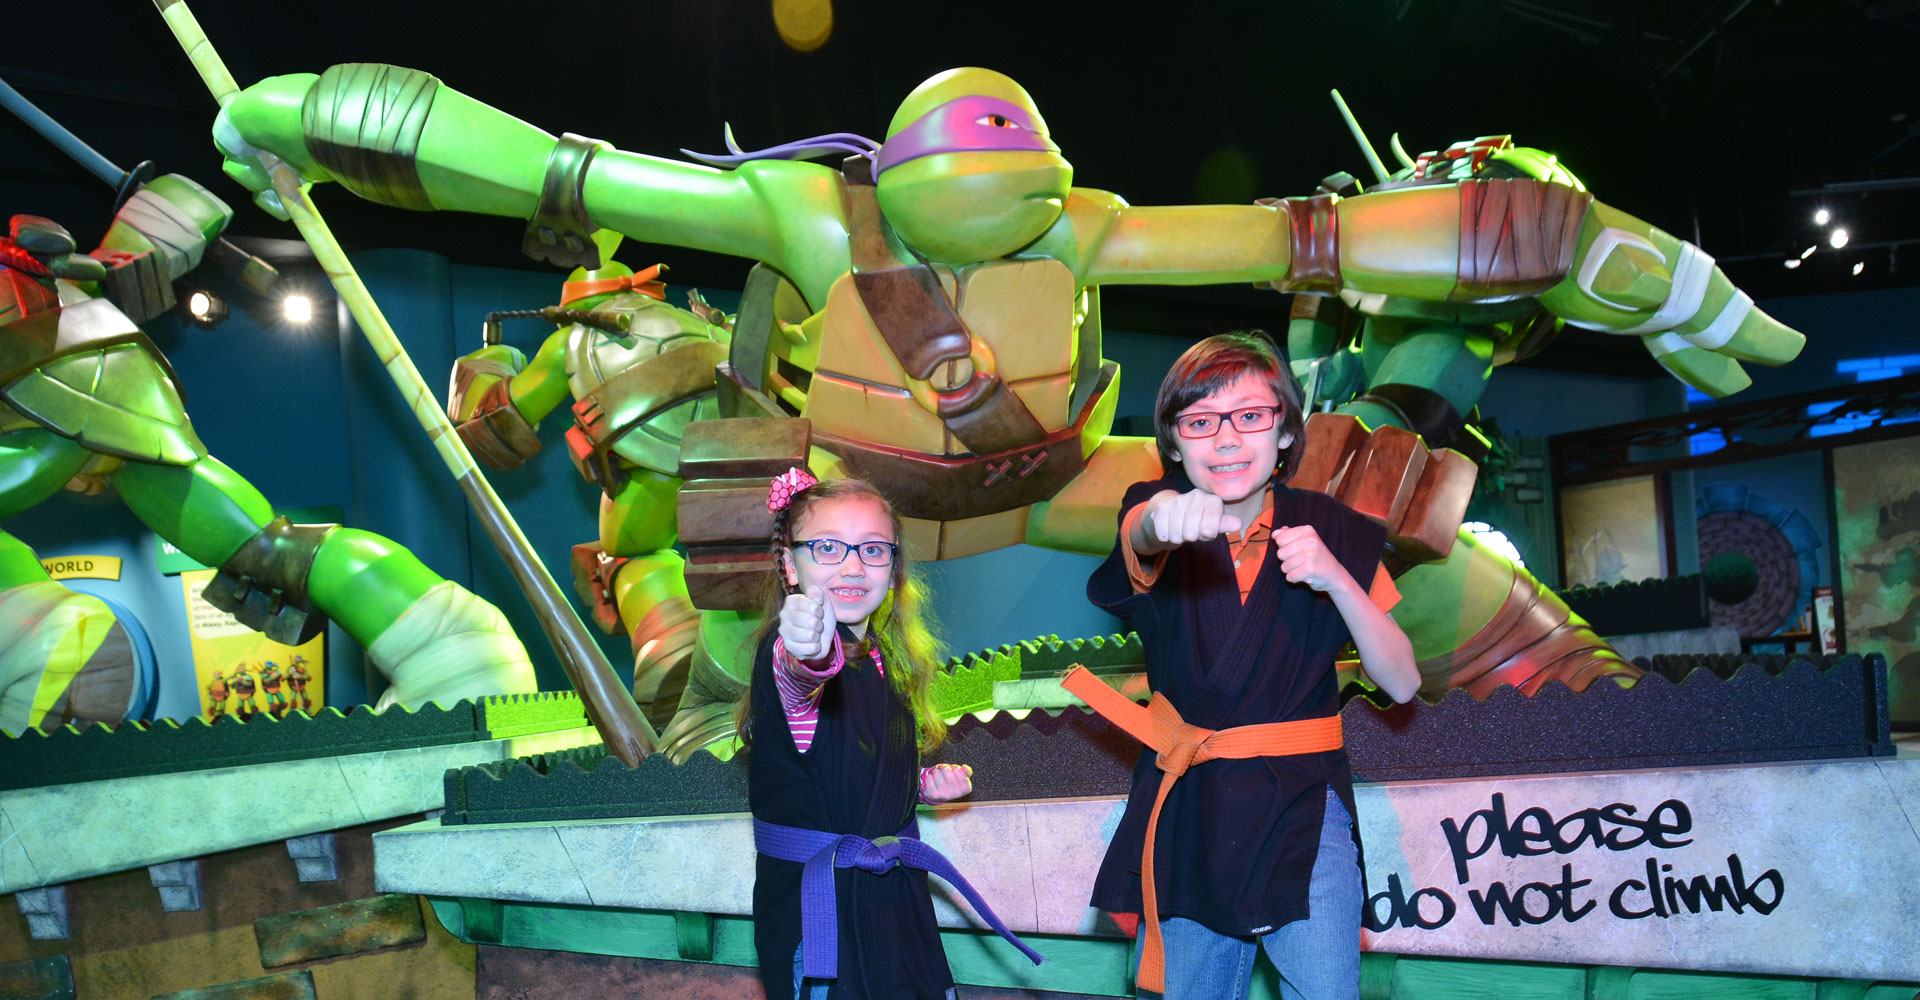 Two older children posing in front of large sculptures of the Teenage Mutant Ninja Turtles.